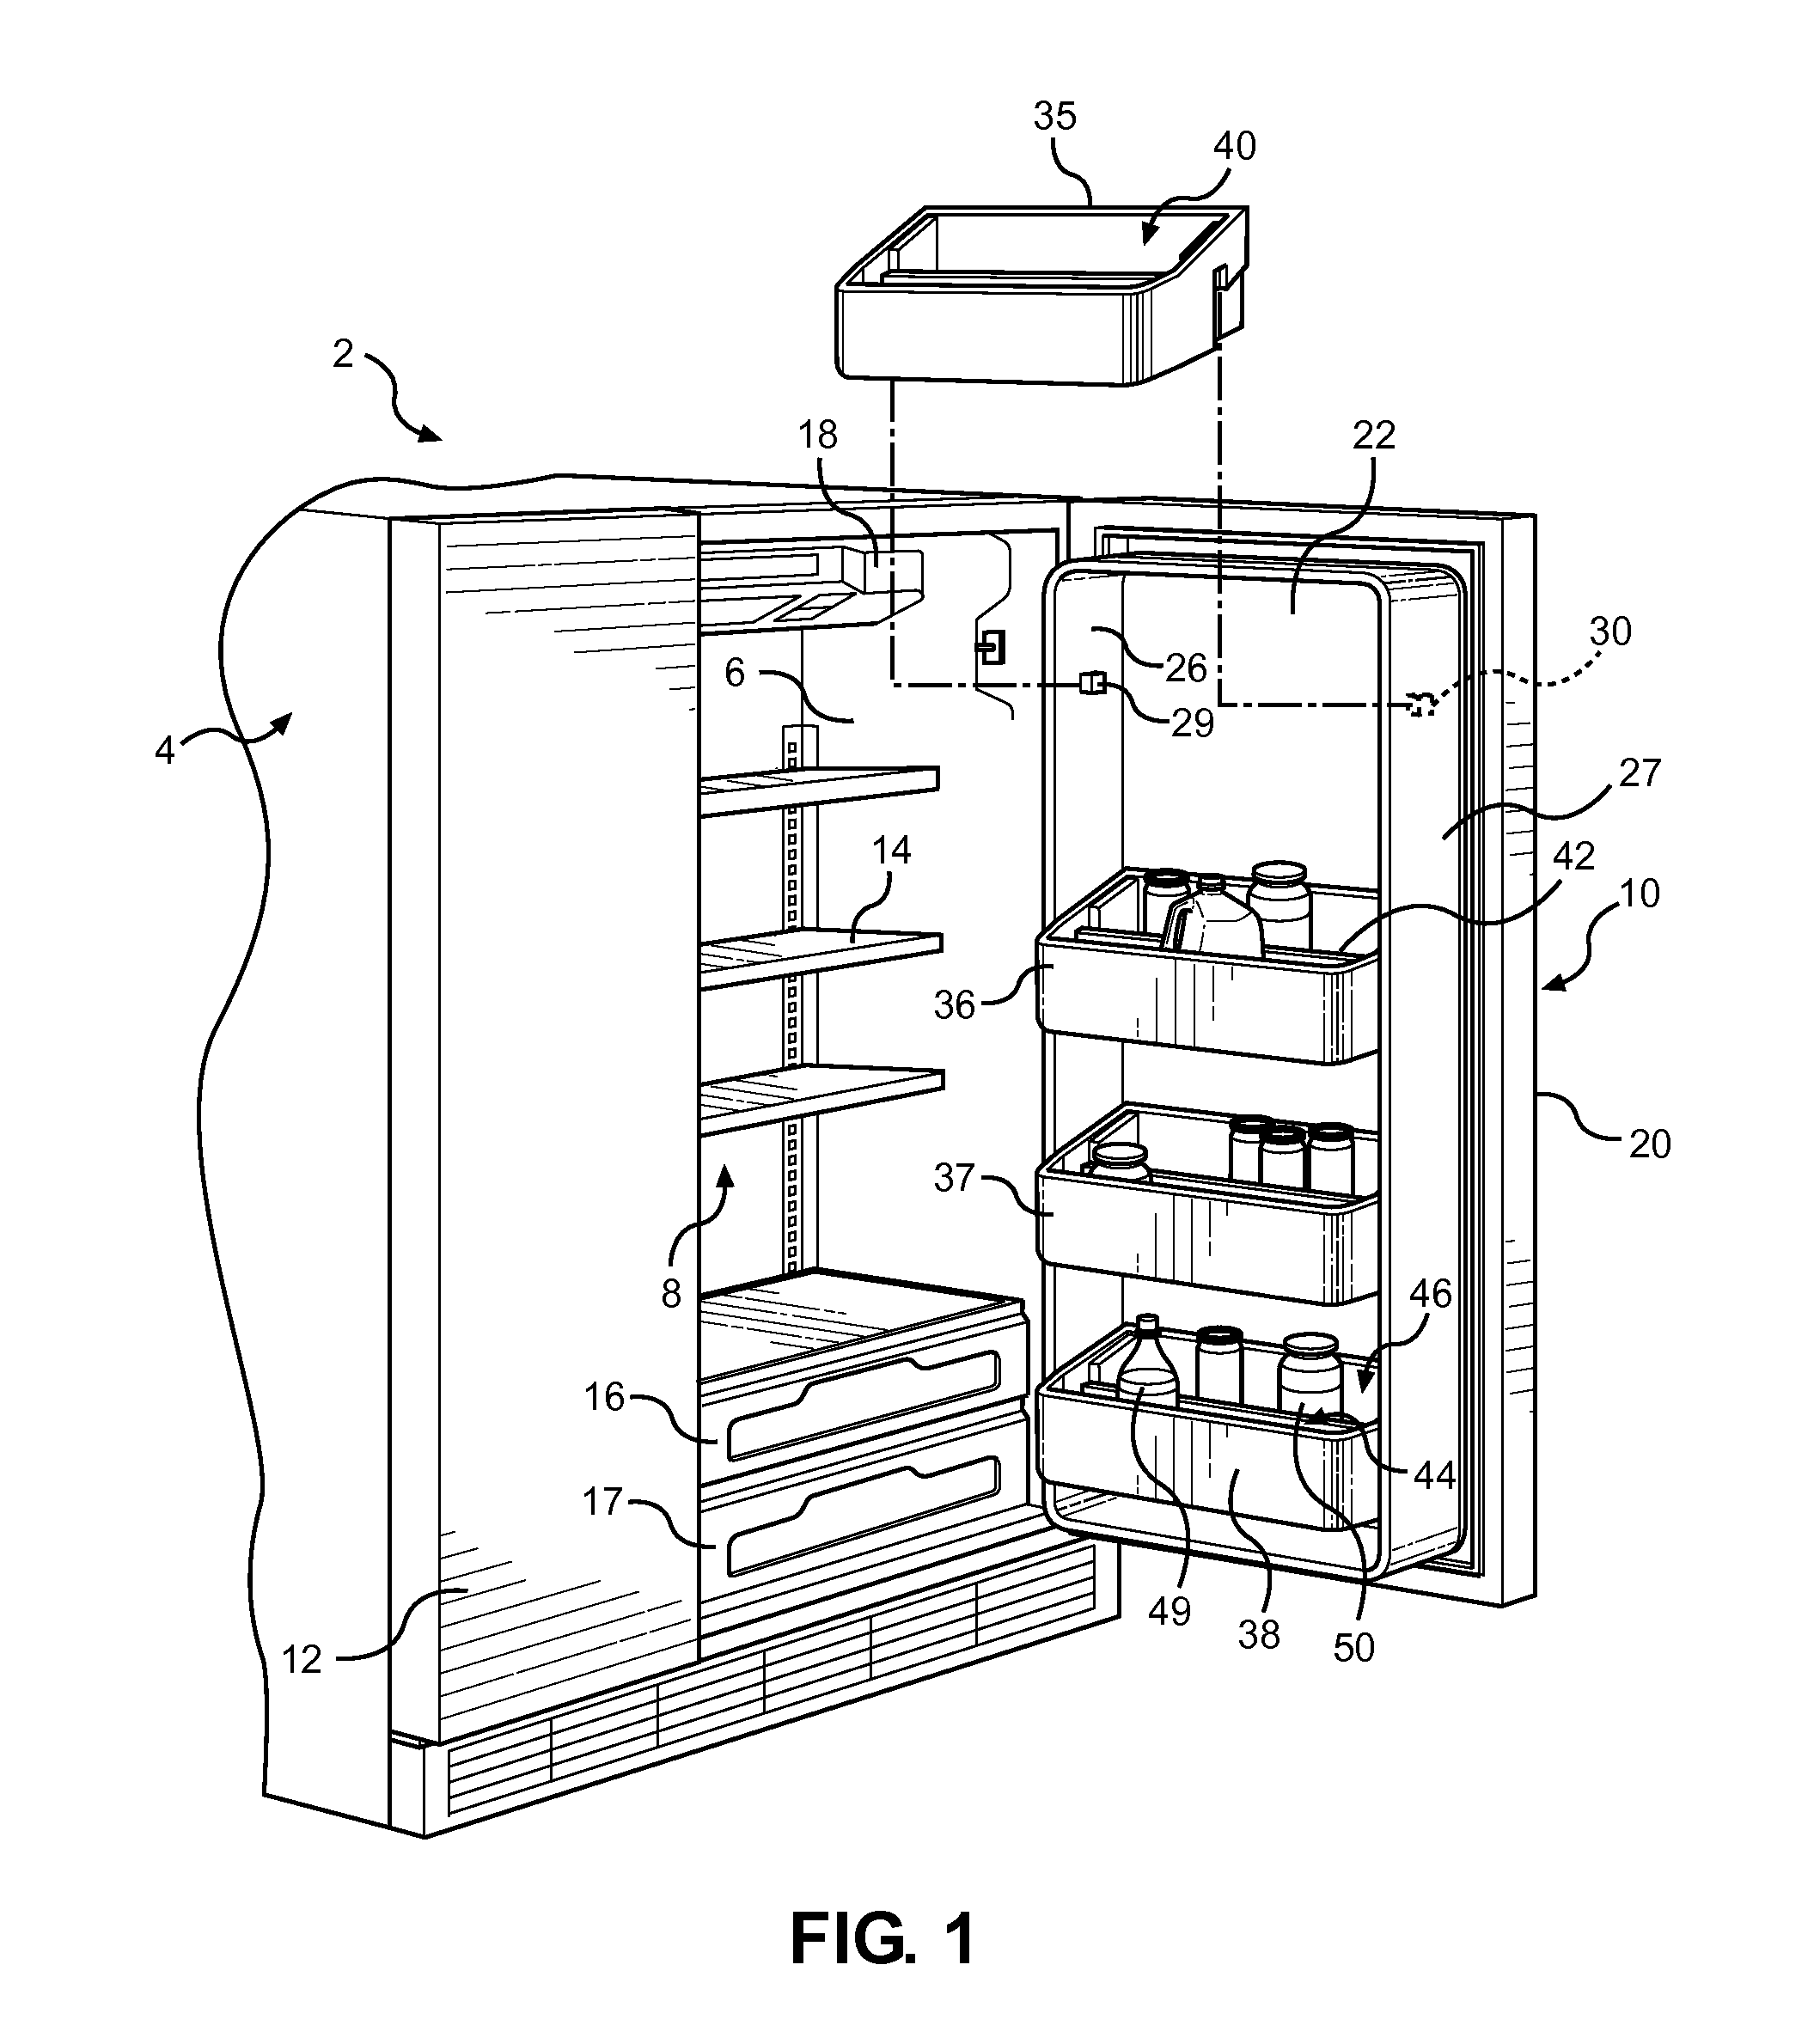 Tiered storage system for refrigerator door